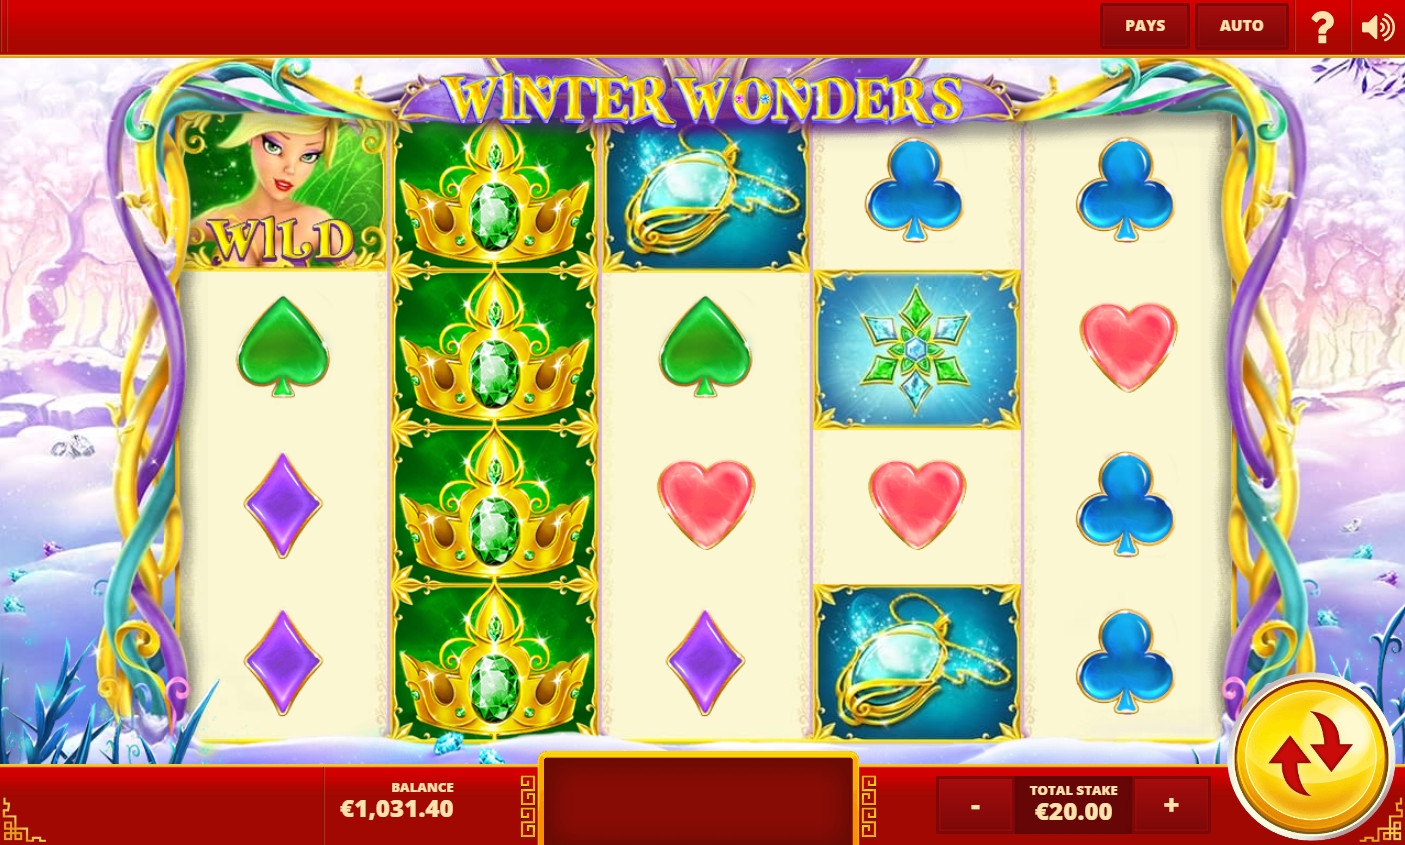 Winter Wonders (Winter Wonders) from category Slots